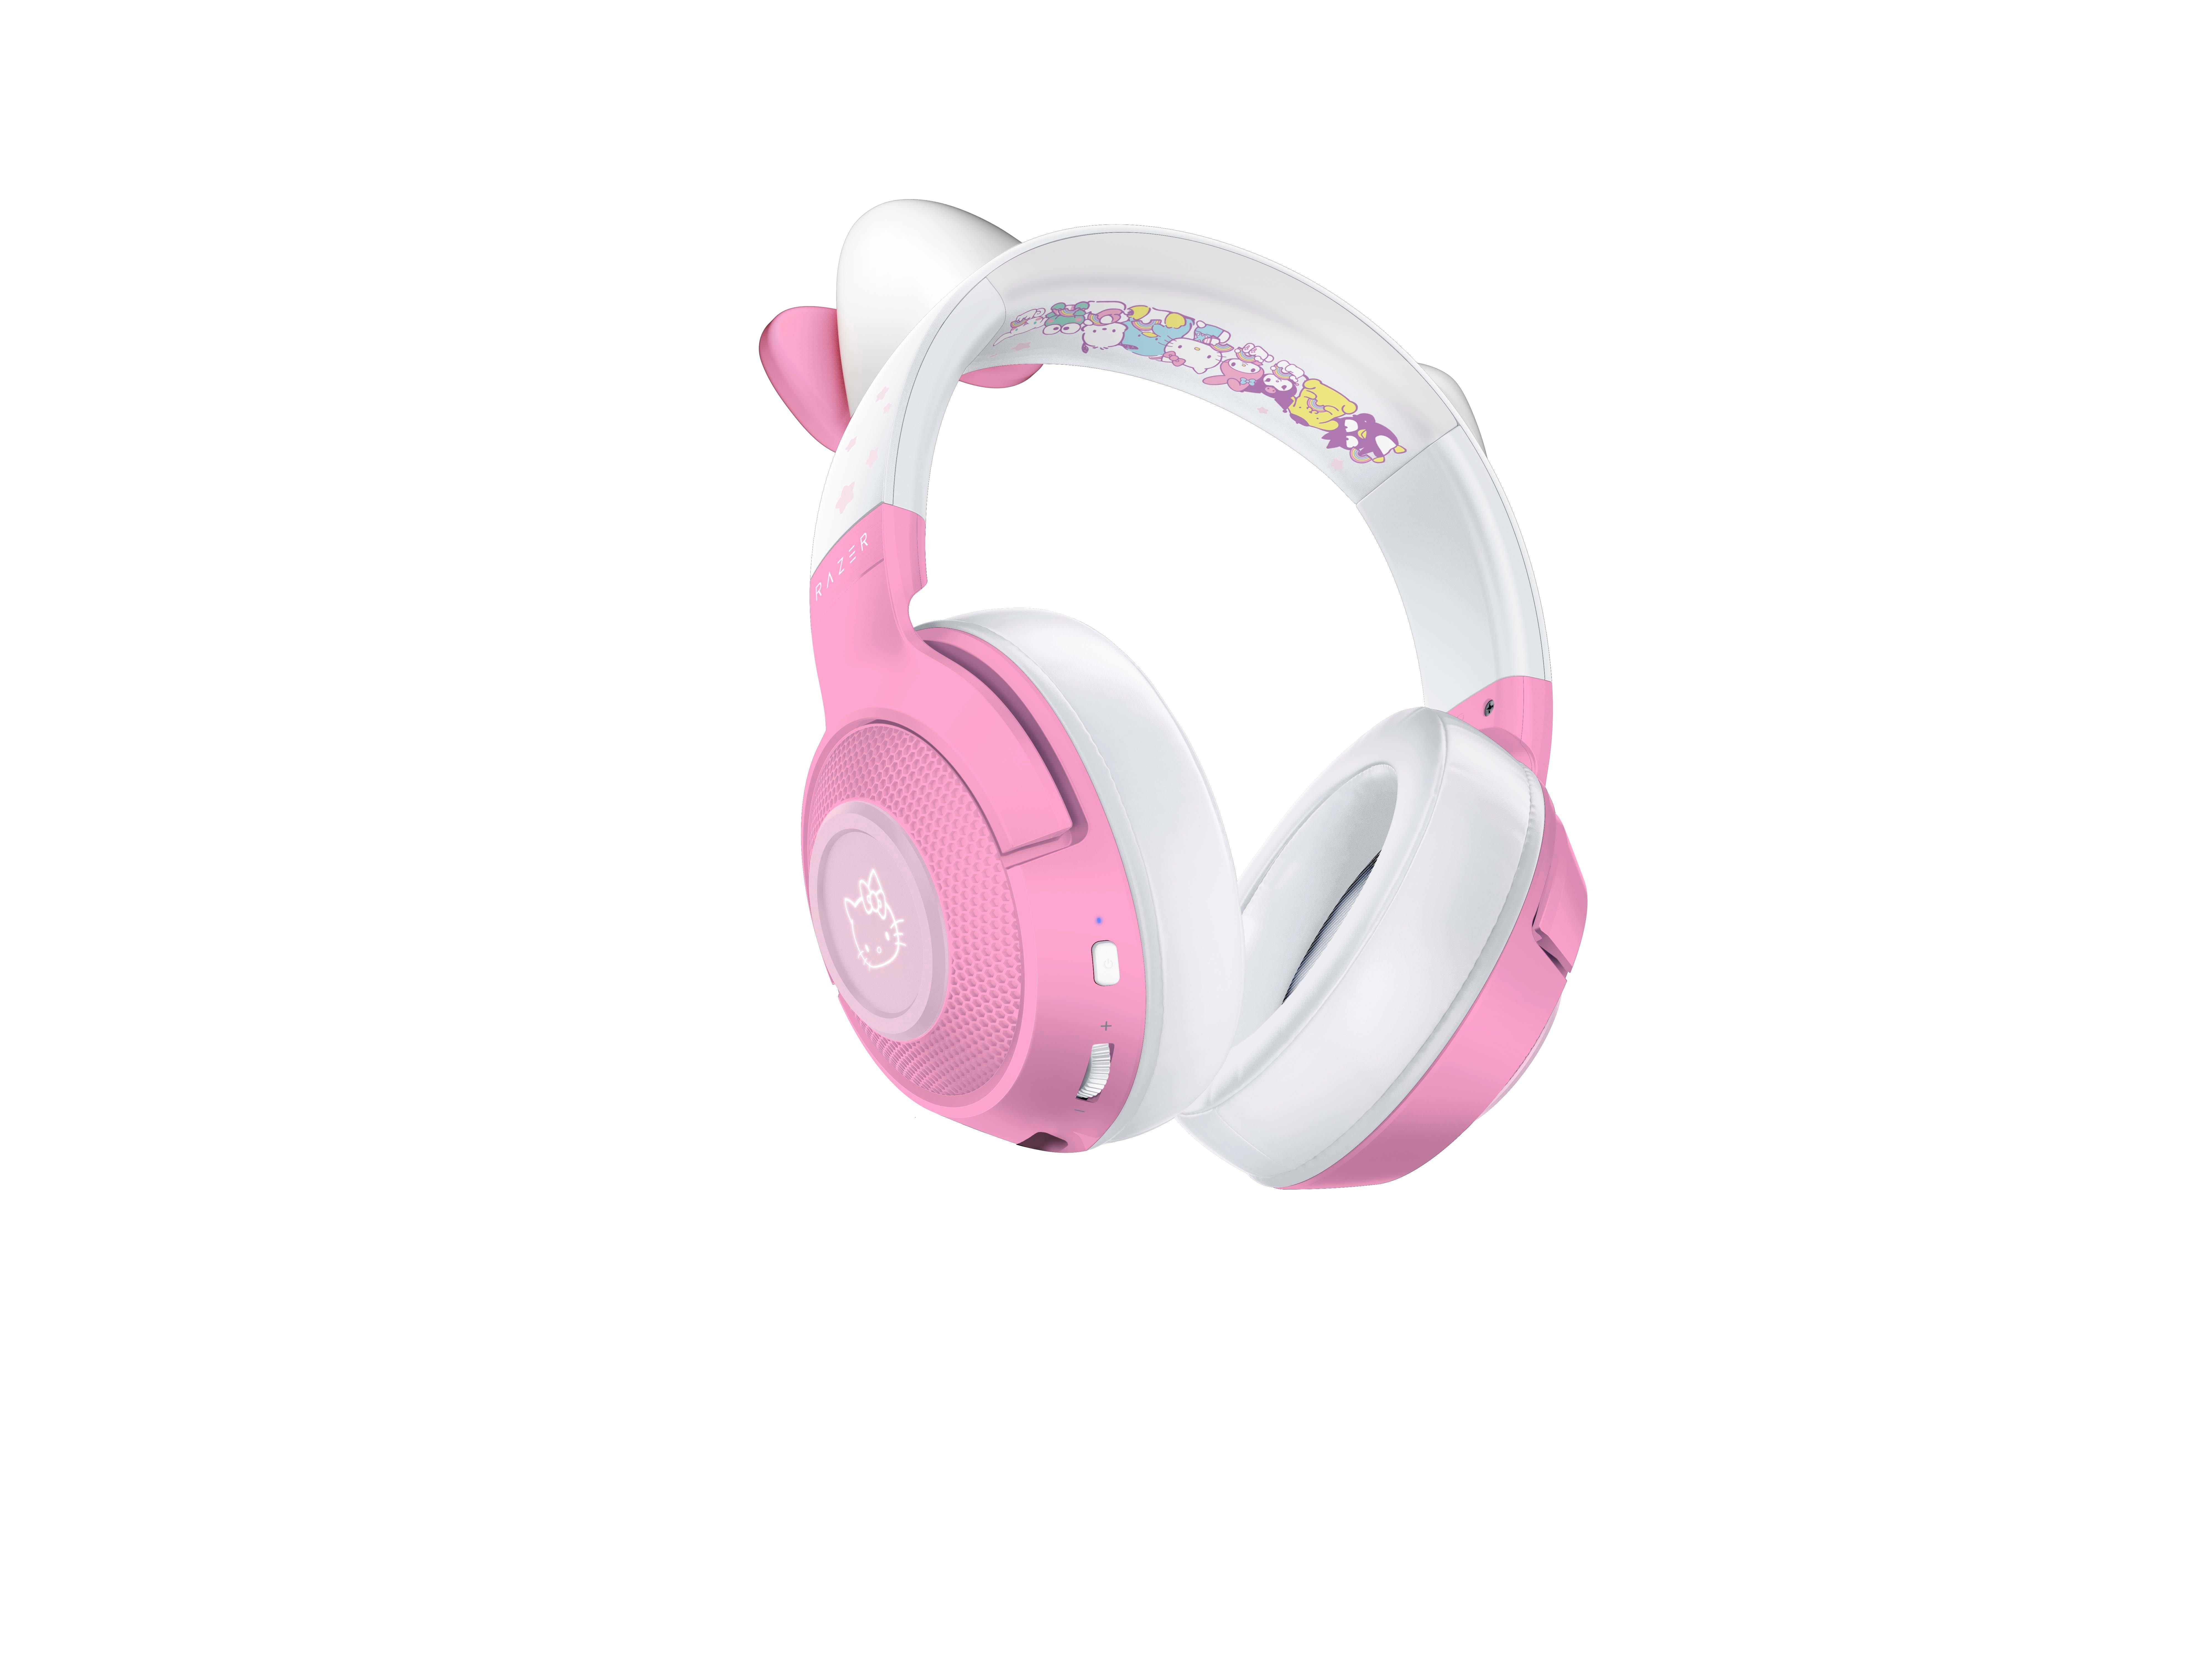 list item 2 of 3 Razer Kraken BT Hello Kitty and Friends Edition Wireless Gaming Headset for Mobile